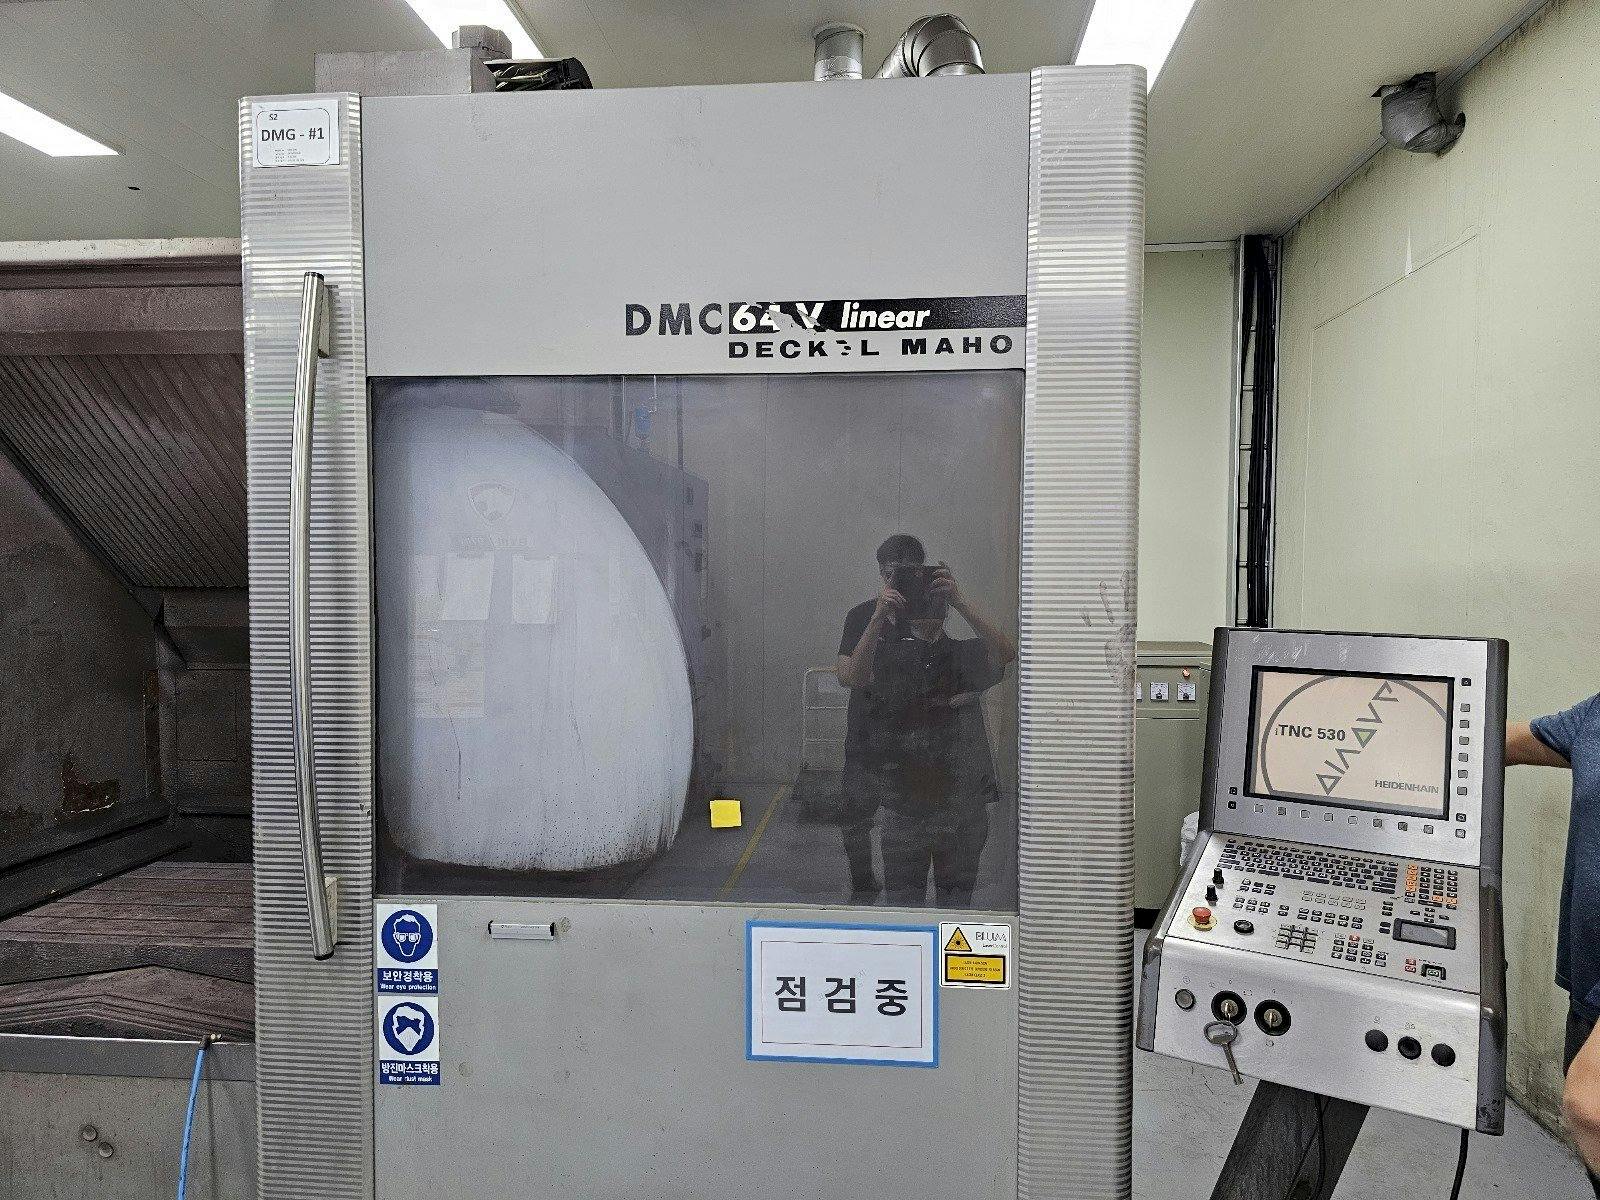 Frontansicht der DECKEL MAHO DMC 64V linear  Maschine